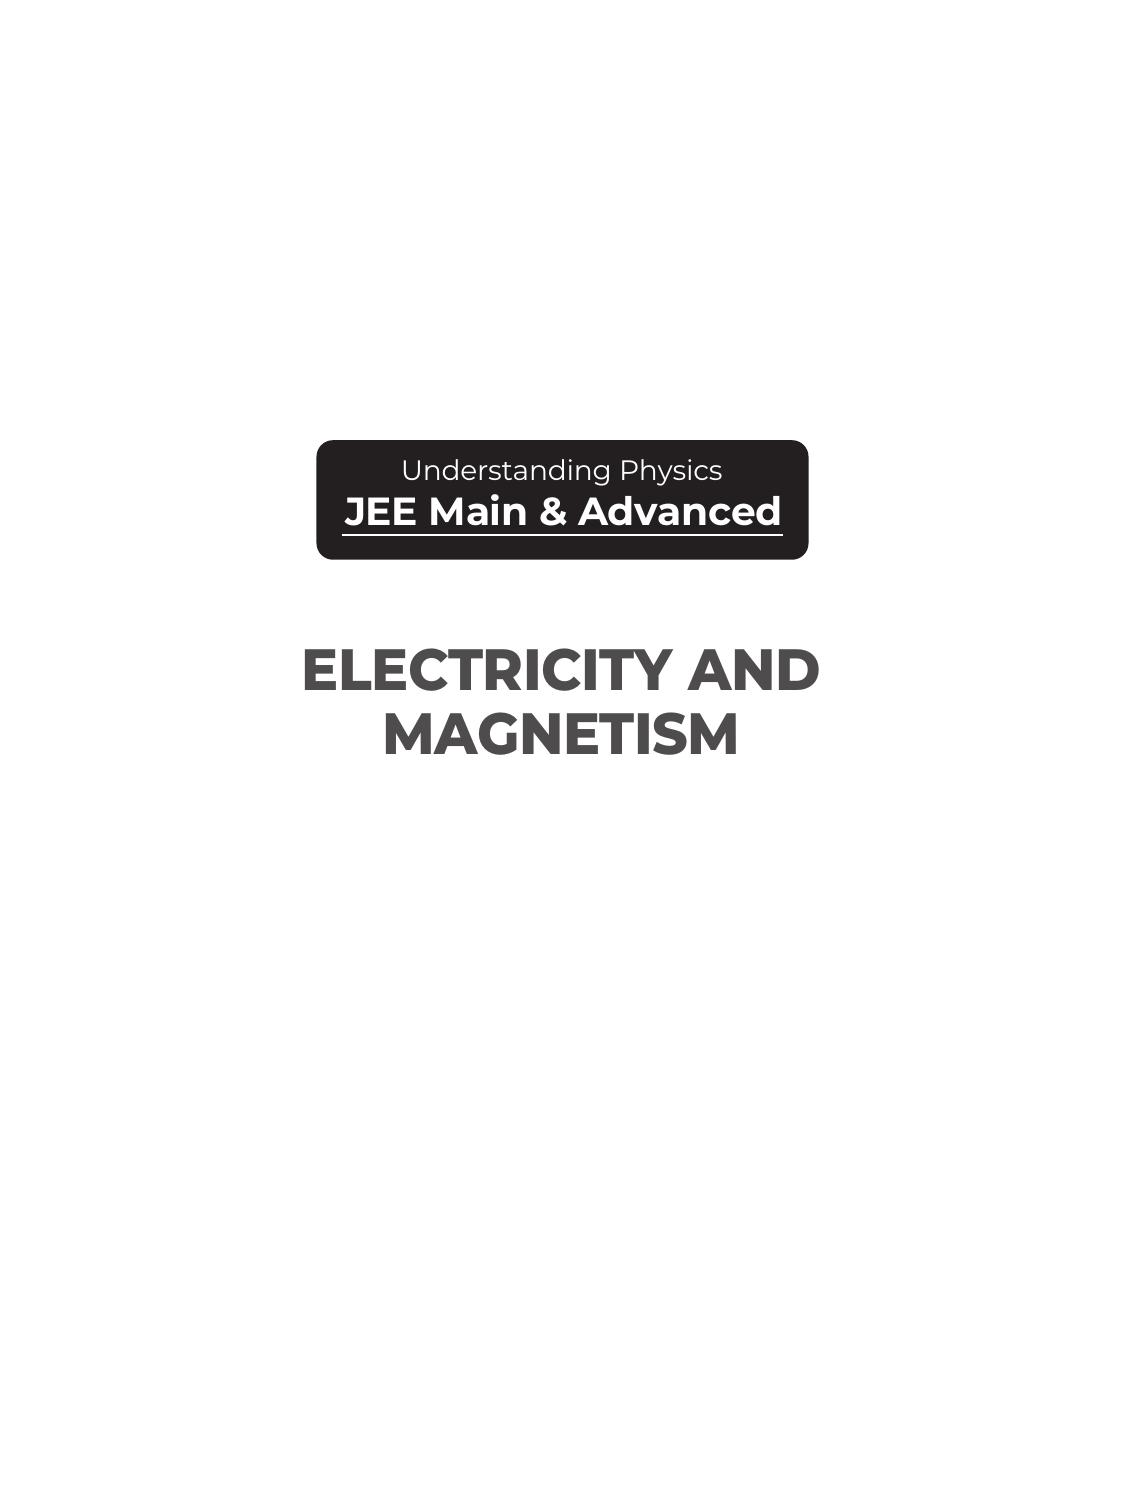 Electricity & Magnetism B025 (Final).job